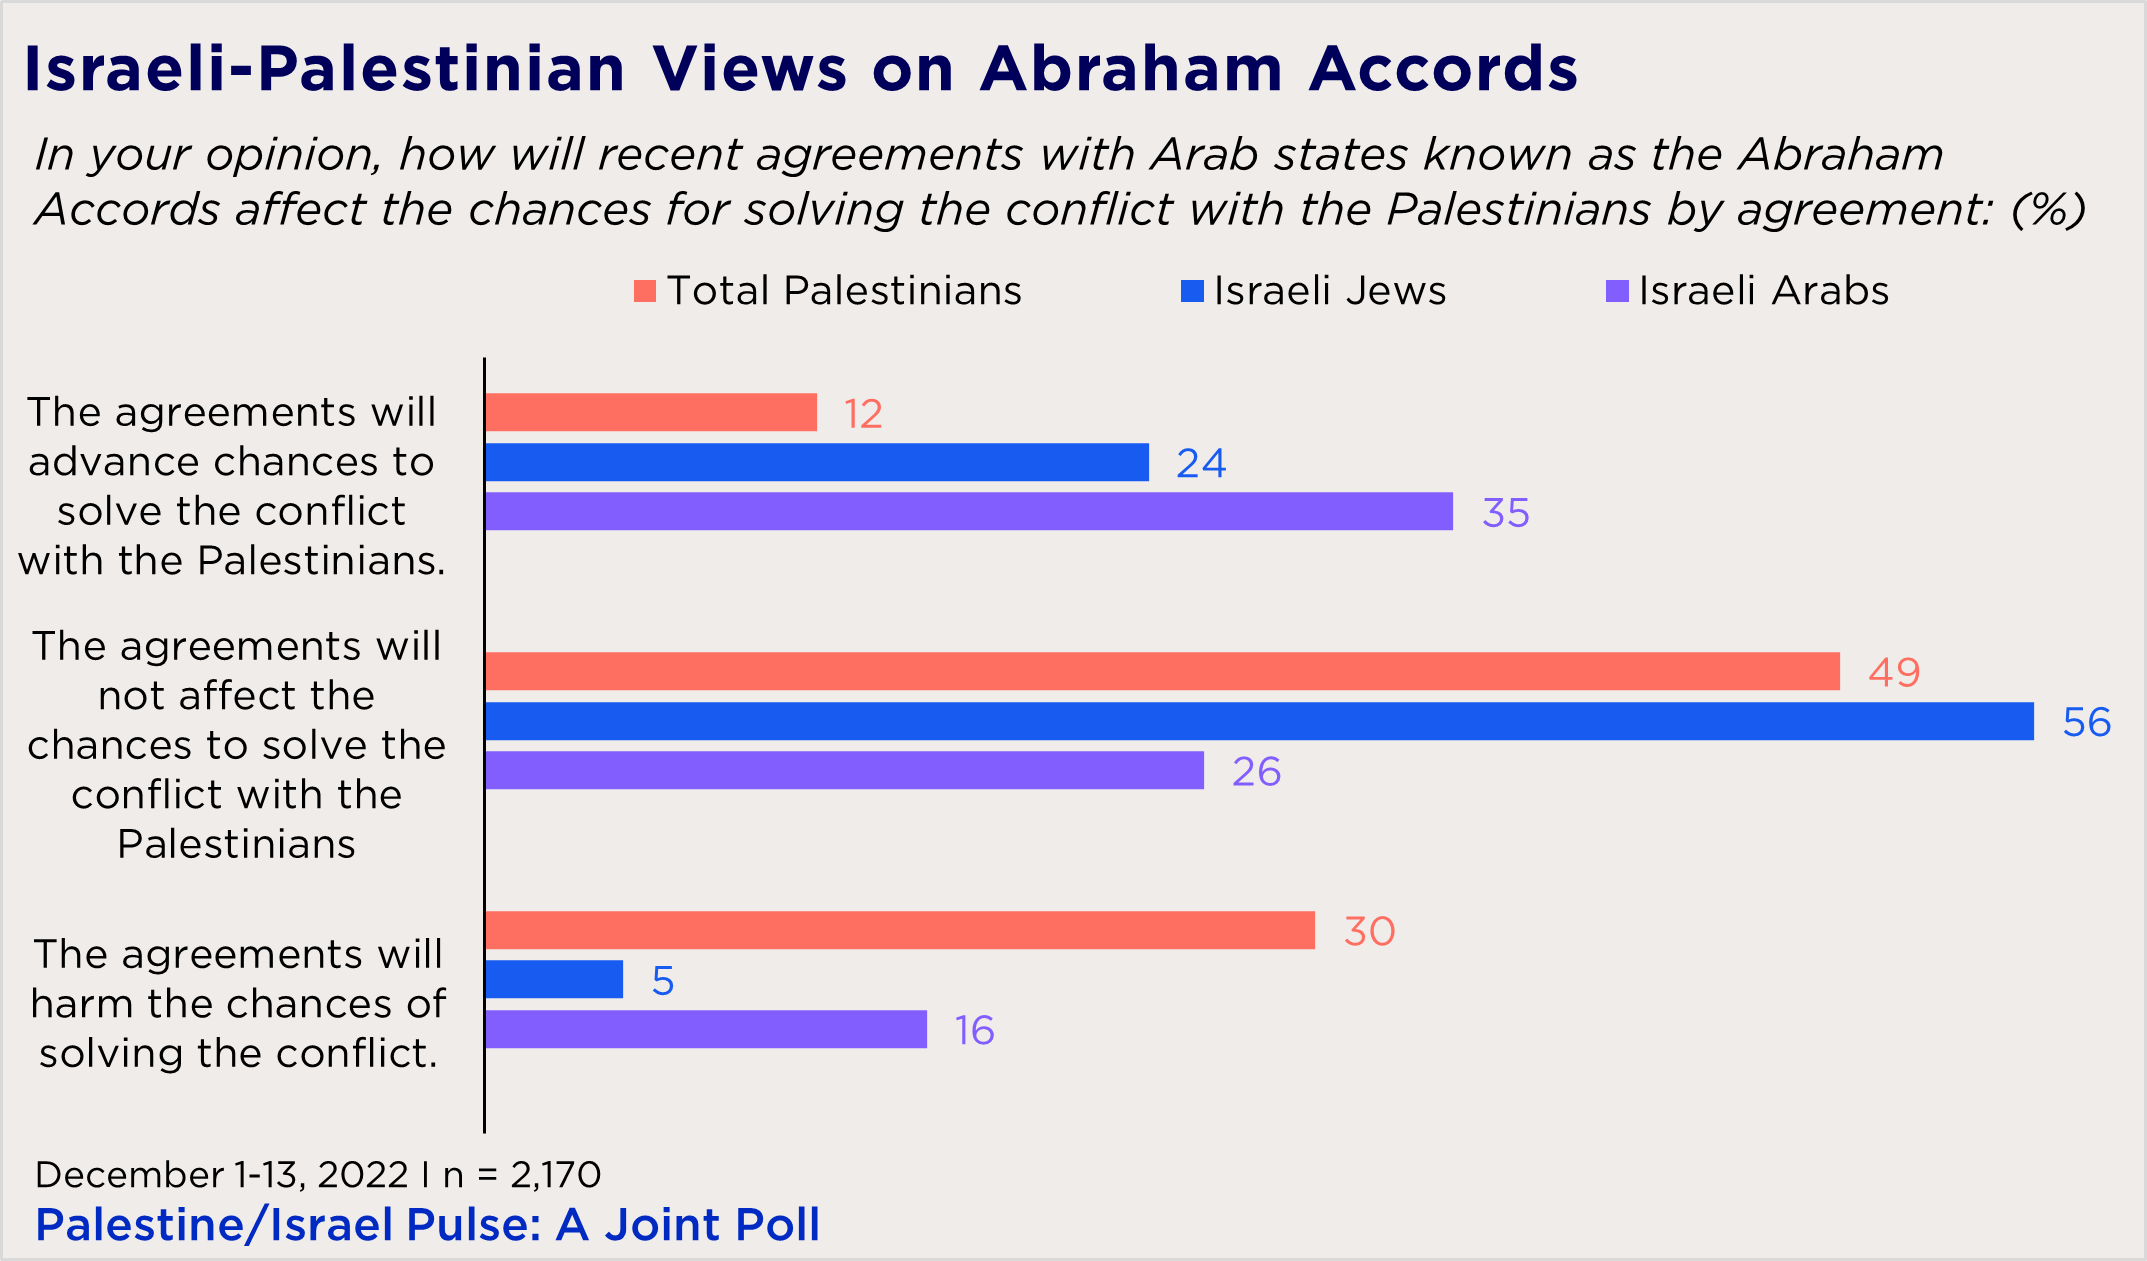 "bar chart showing Israeli-Palestinian views on Abraham Accords"